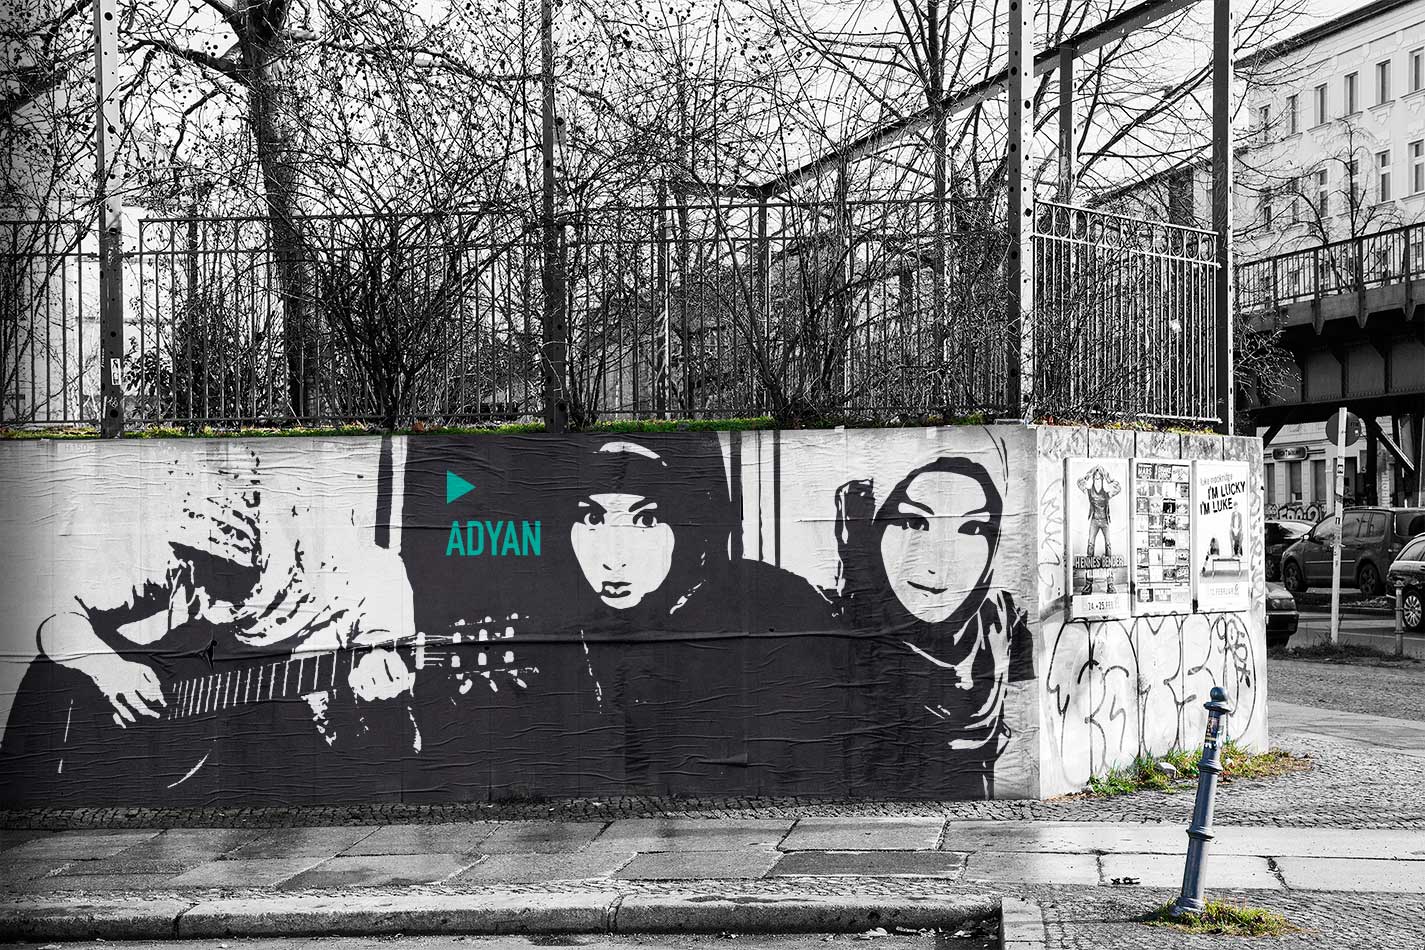 Foto/Illustration Kreuzberger Parkmauer mit Adyan als Paste-Up